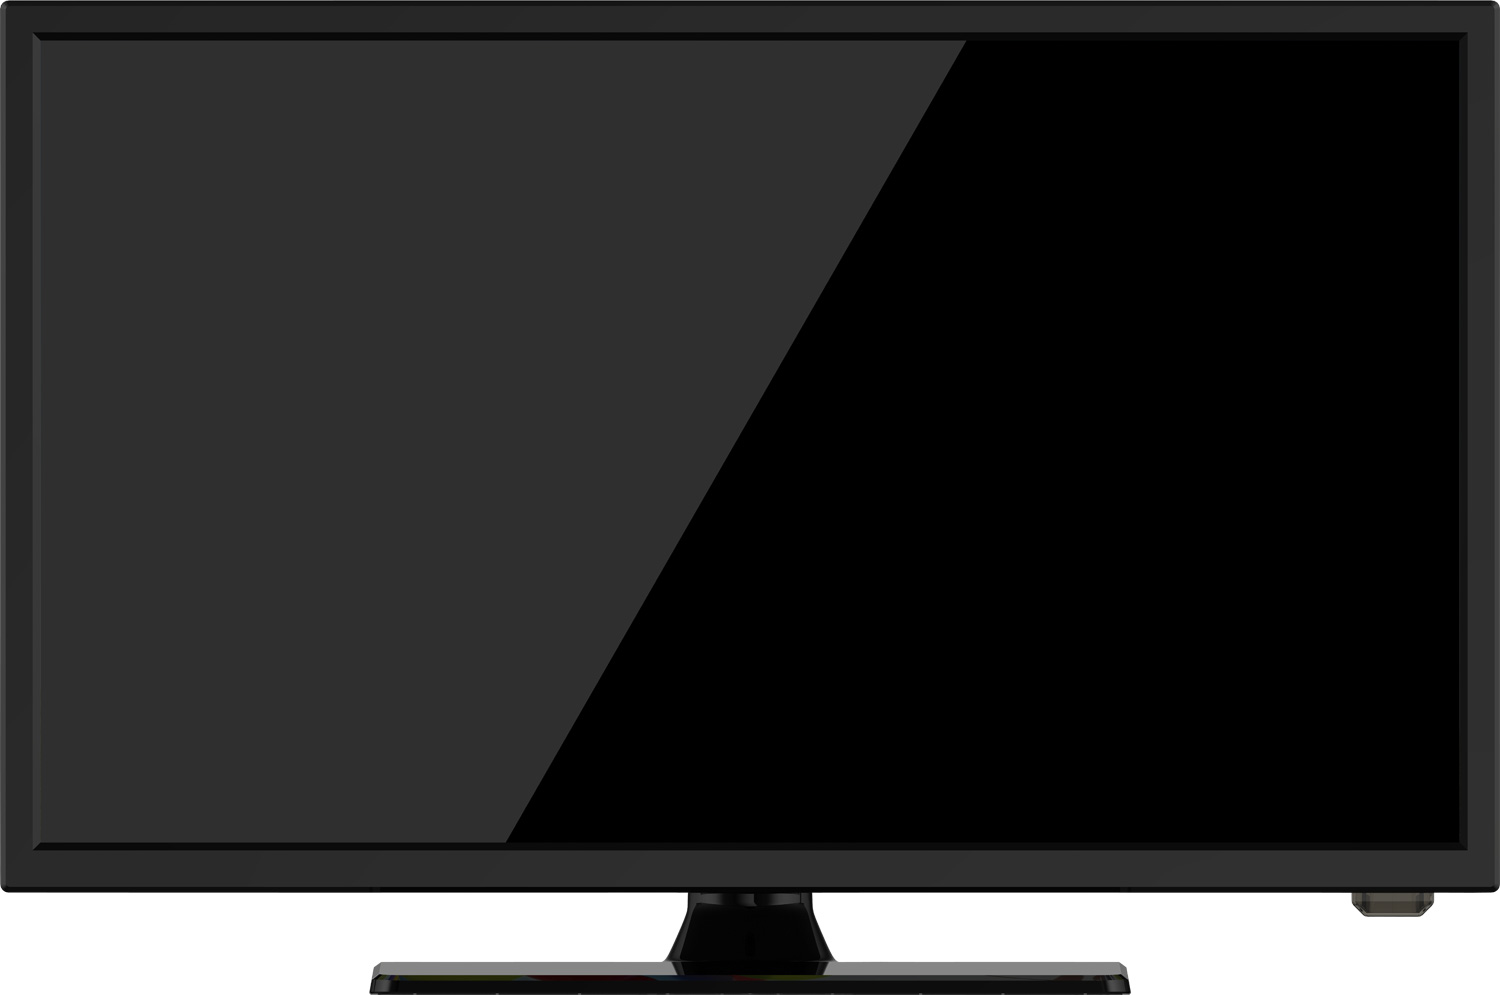 Reflexion LDDW22i+ 6in1 Smart LED-TV mit DVD Player / Bluetooth /HDMI / USB / WiFi 22 Zoll